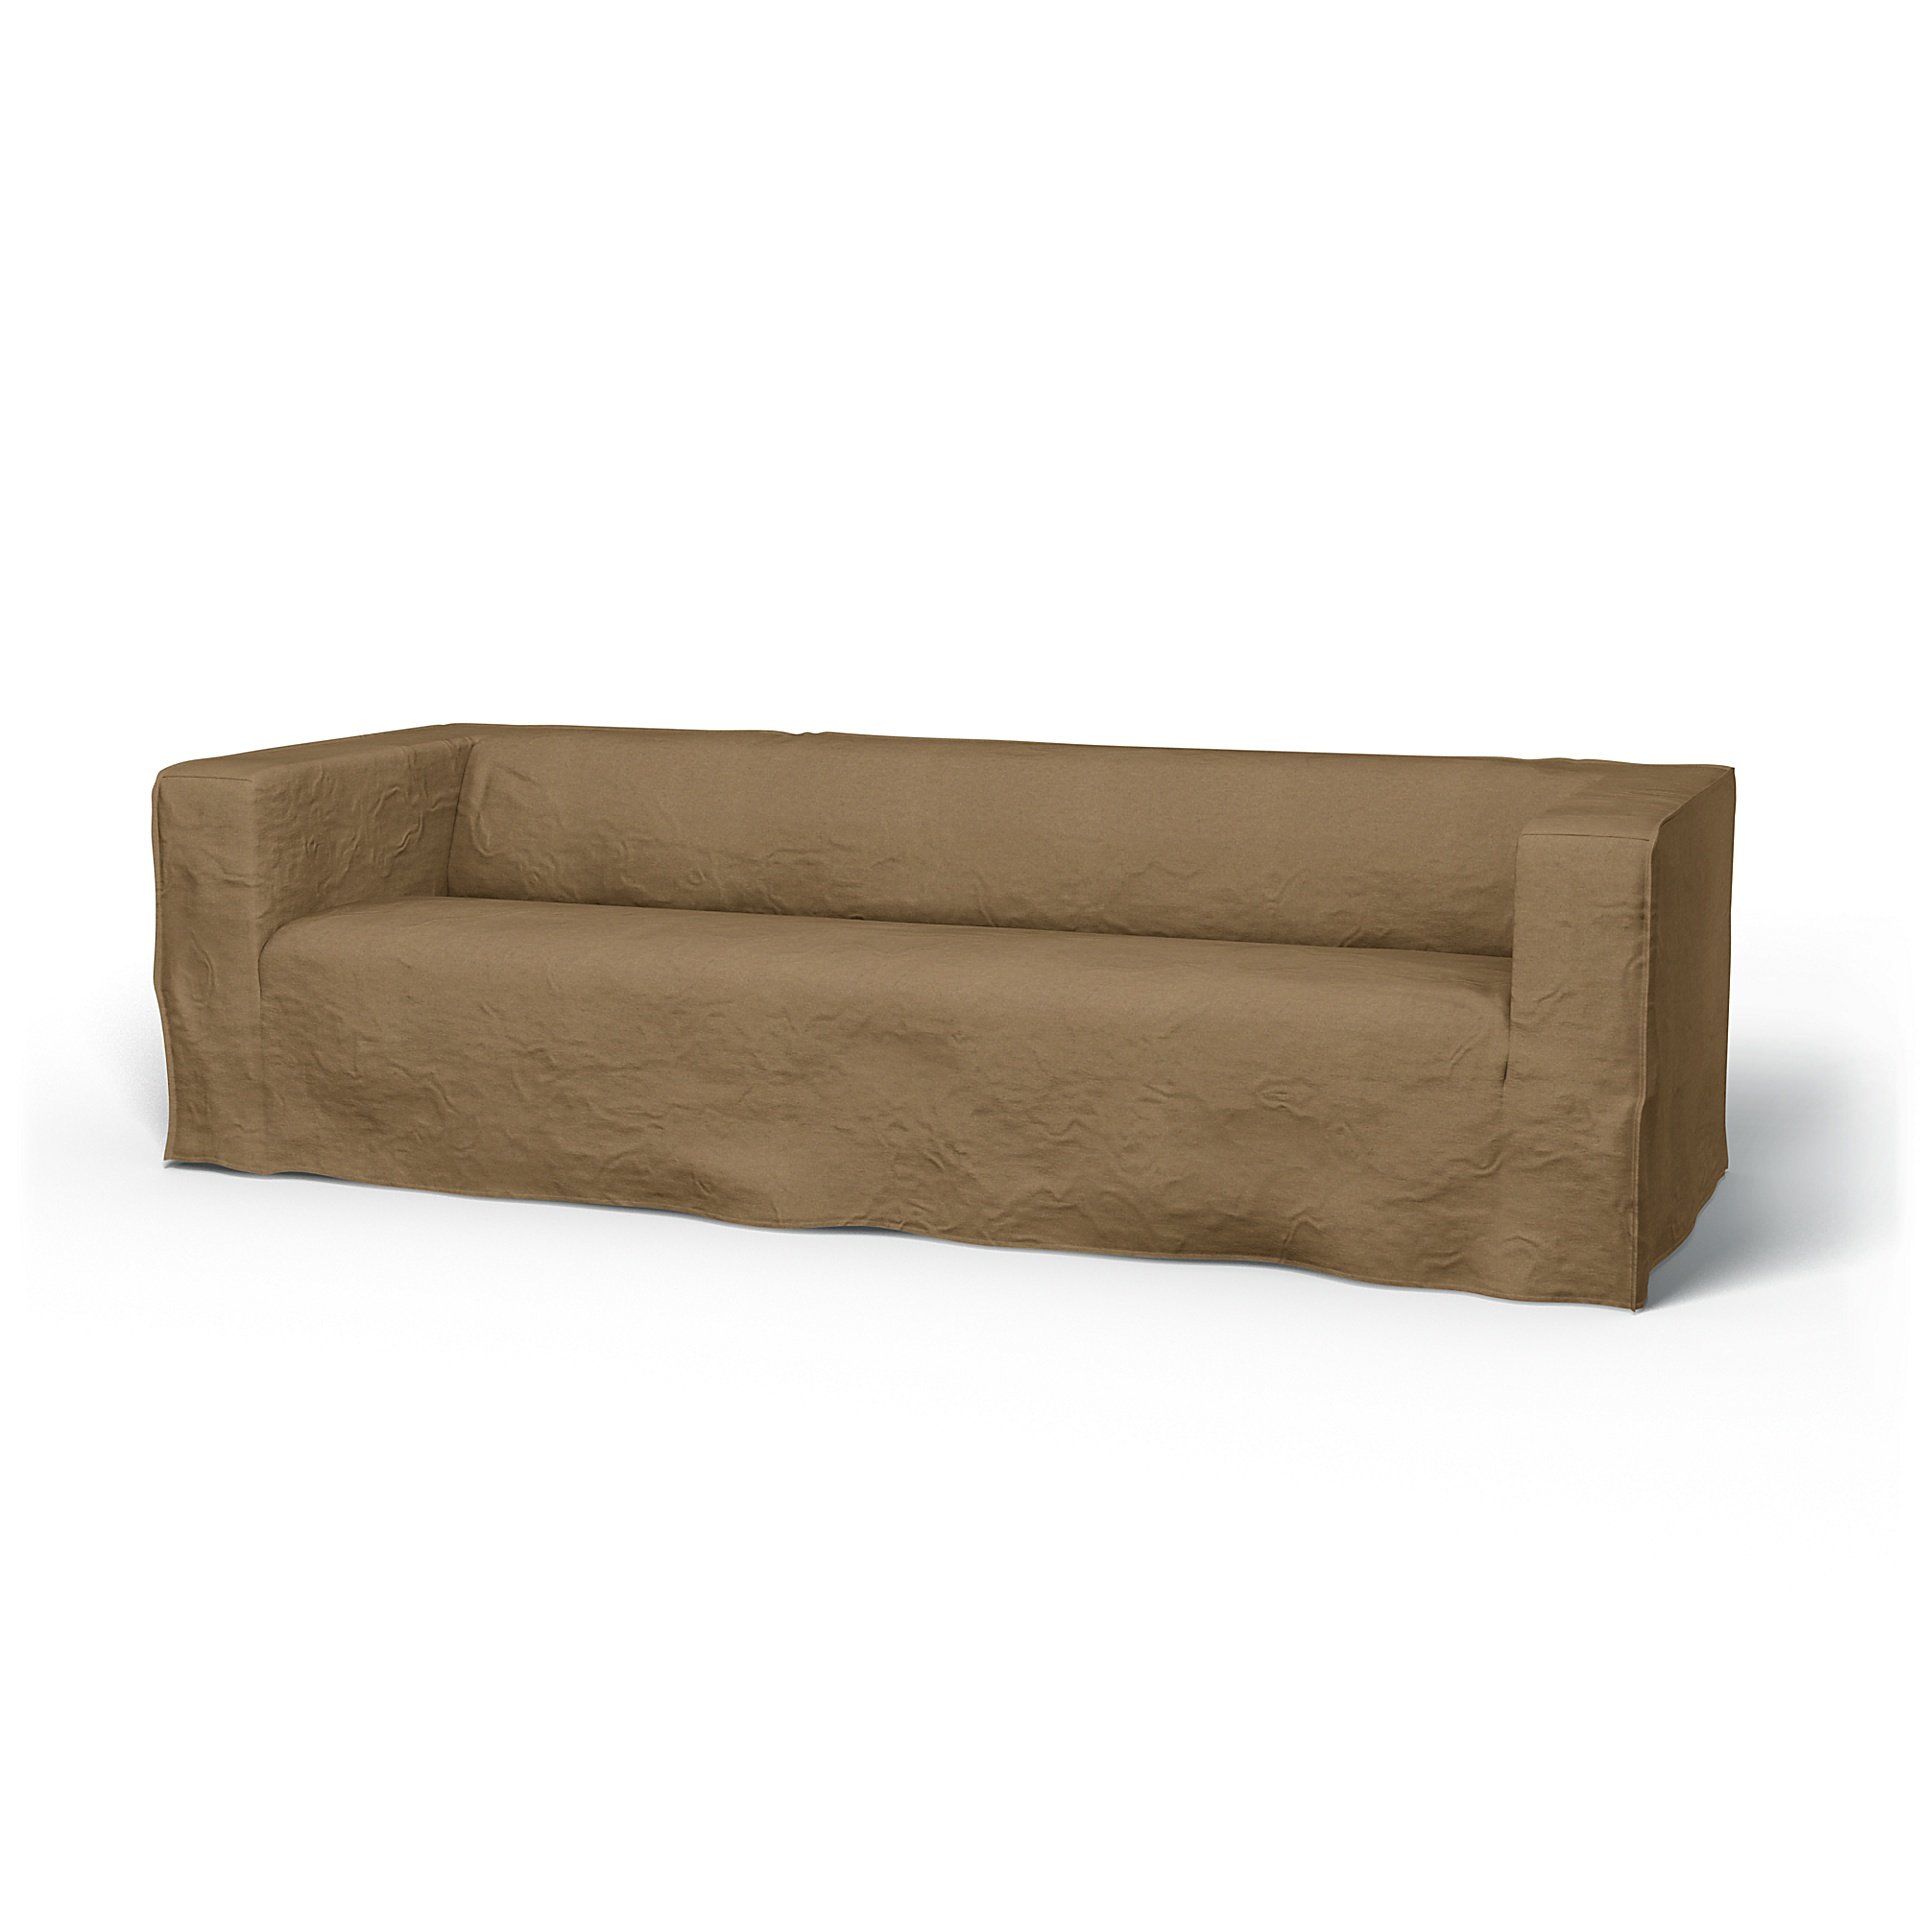 IKEA - Klippan 4 Seater Sofa Cover, Sand, Wool - Bemz